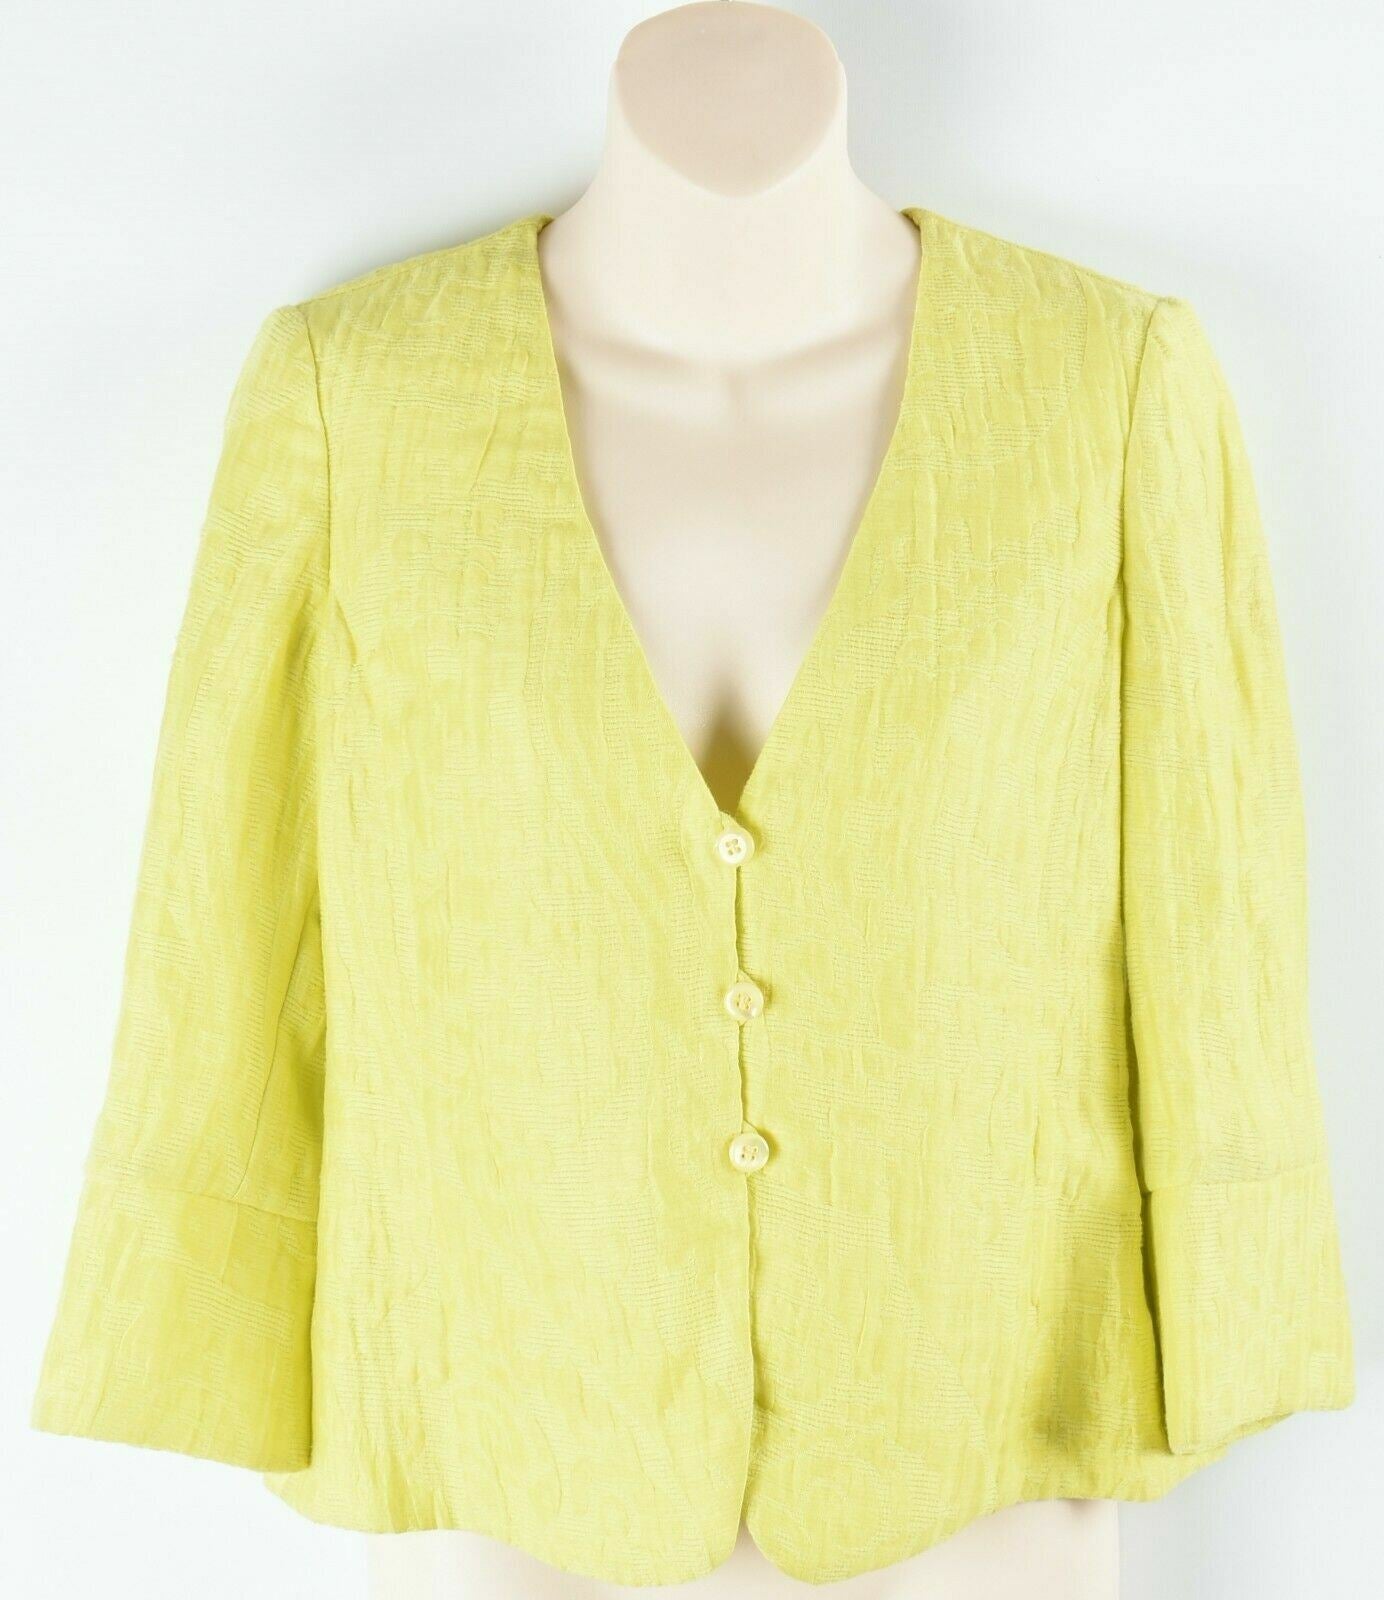 ARMANI COLLEZIONI Women's Yellow Textured Linen Blend Jacket, size UK 8